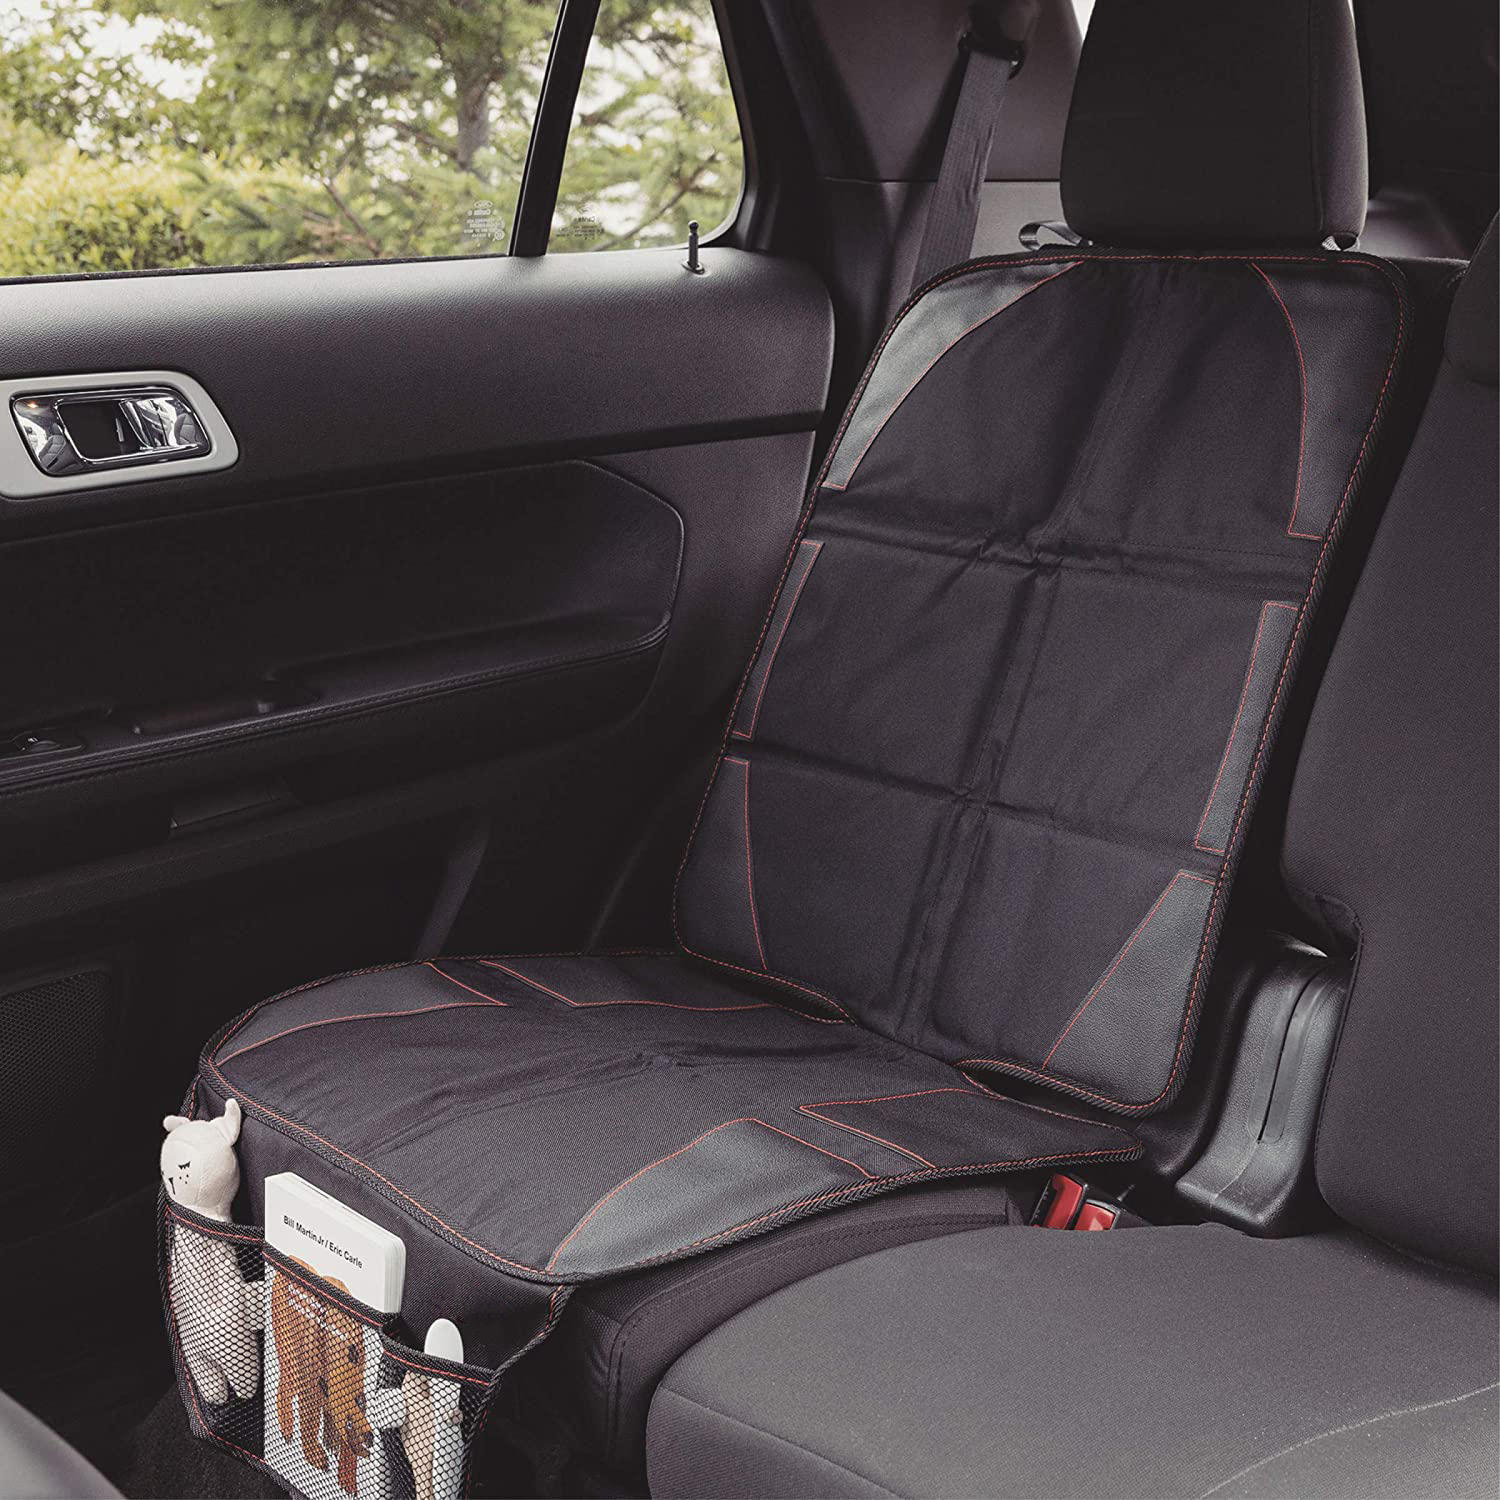 Hot Sale universal child safety seat under pad car seat protector for under seat protector